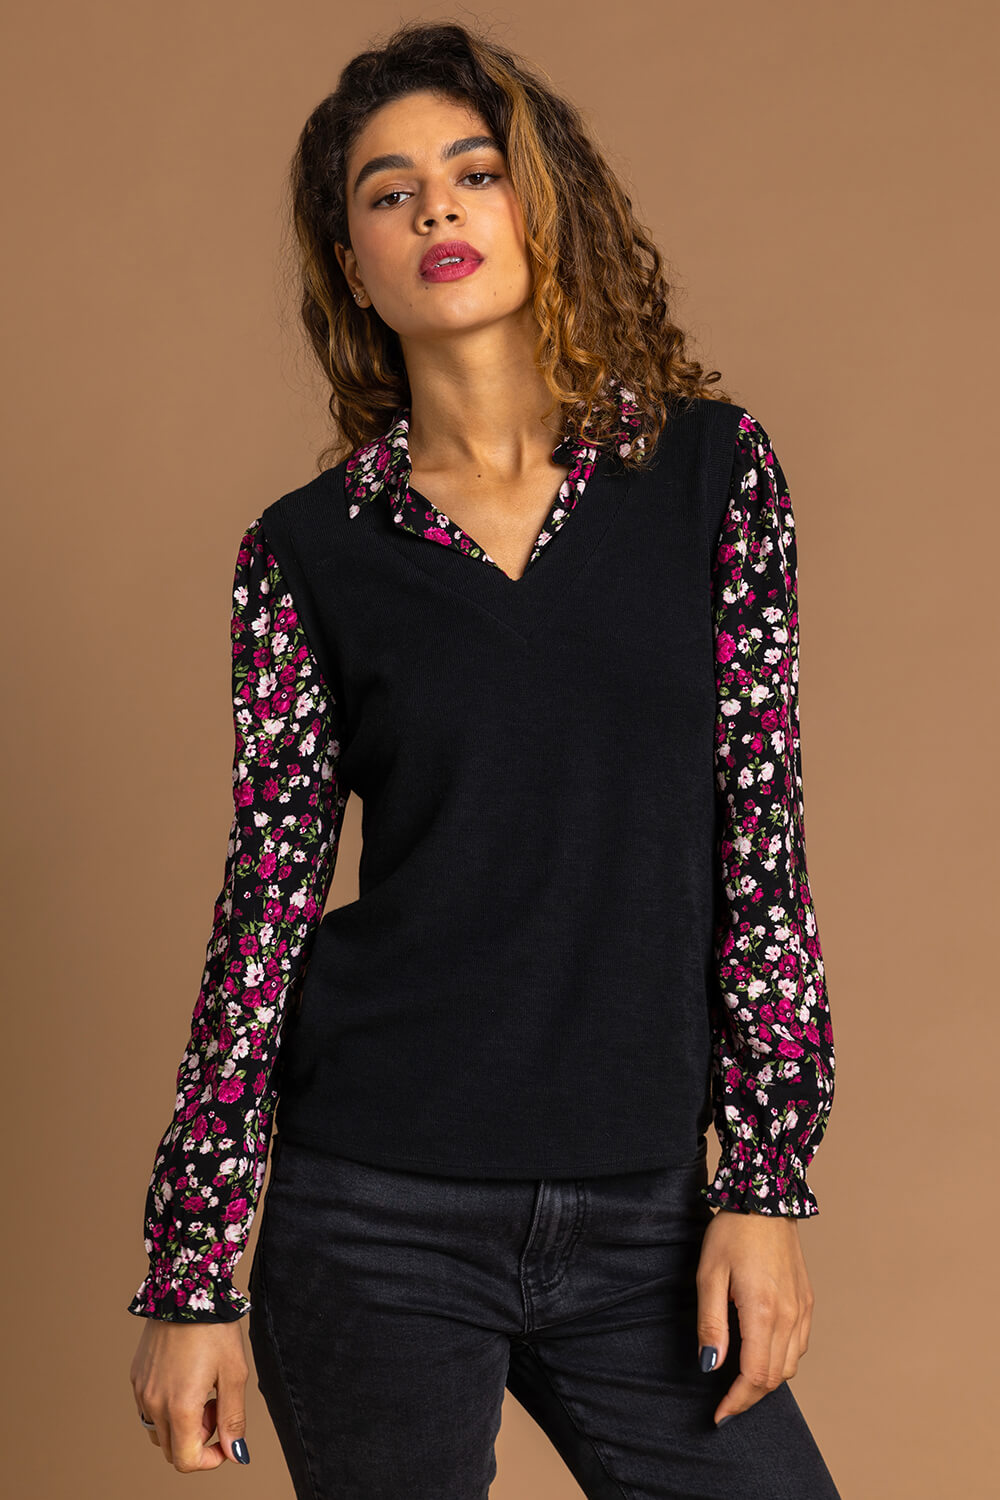 Floral Print Sweater Vest Long Sleeve Top